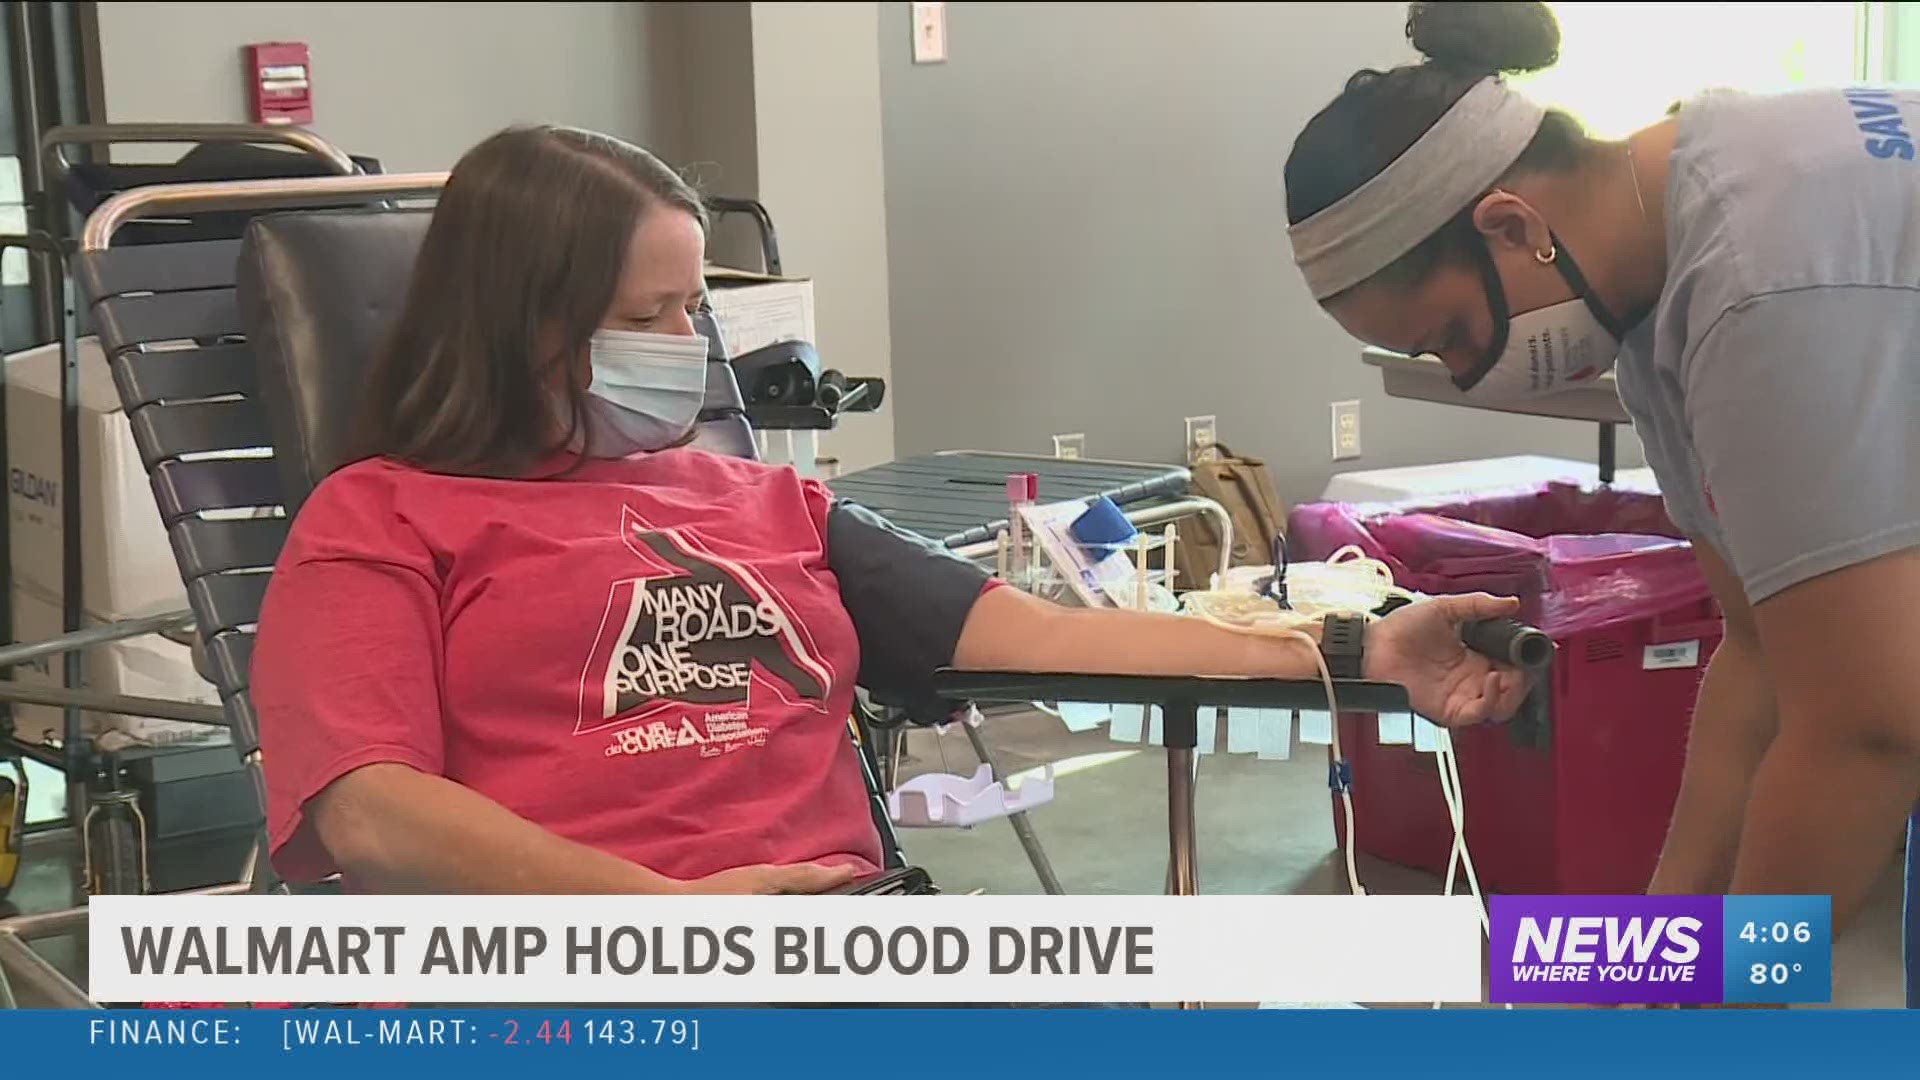 Walmart AMP Holds Blood Drive